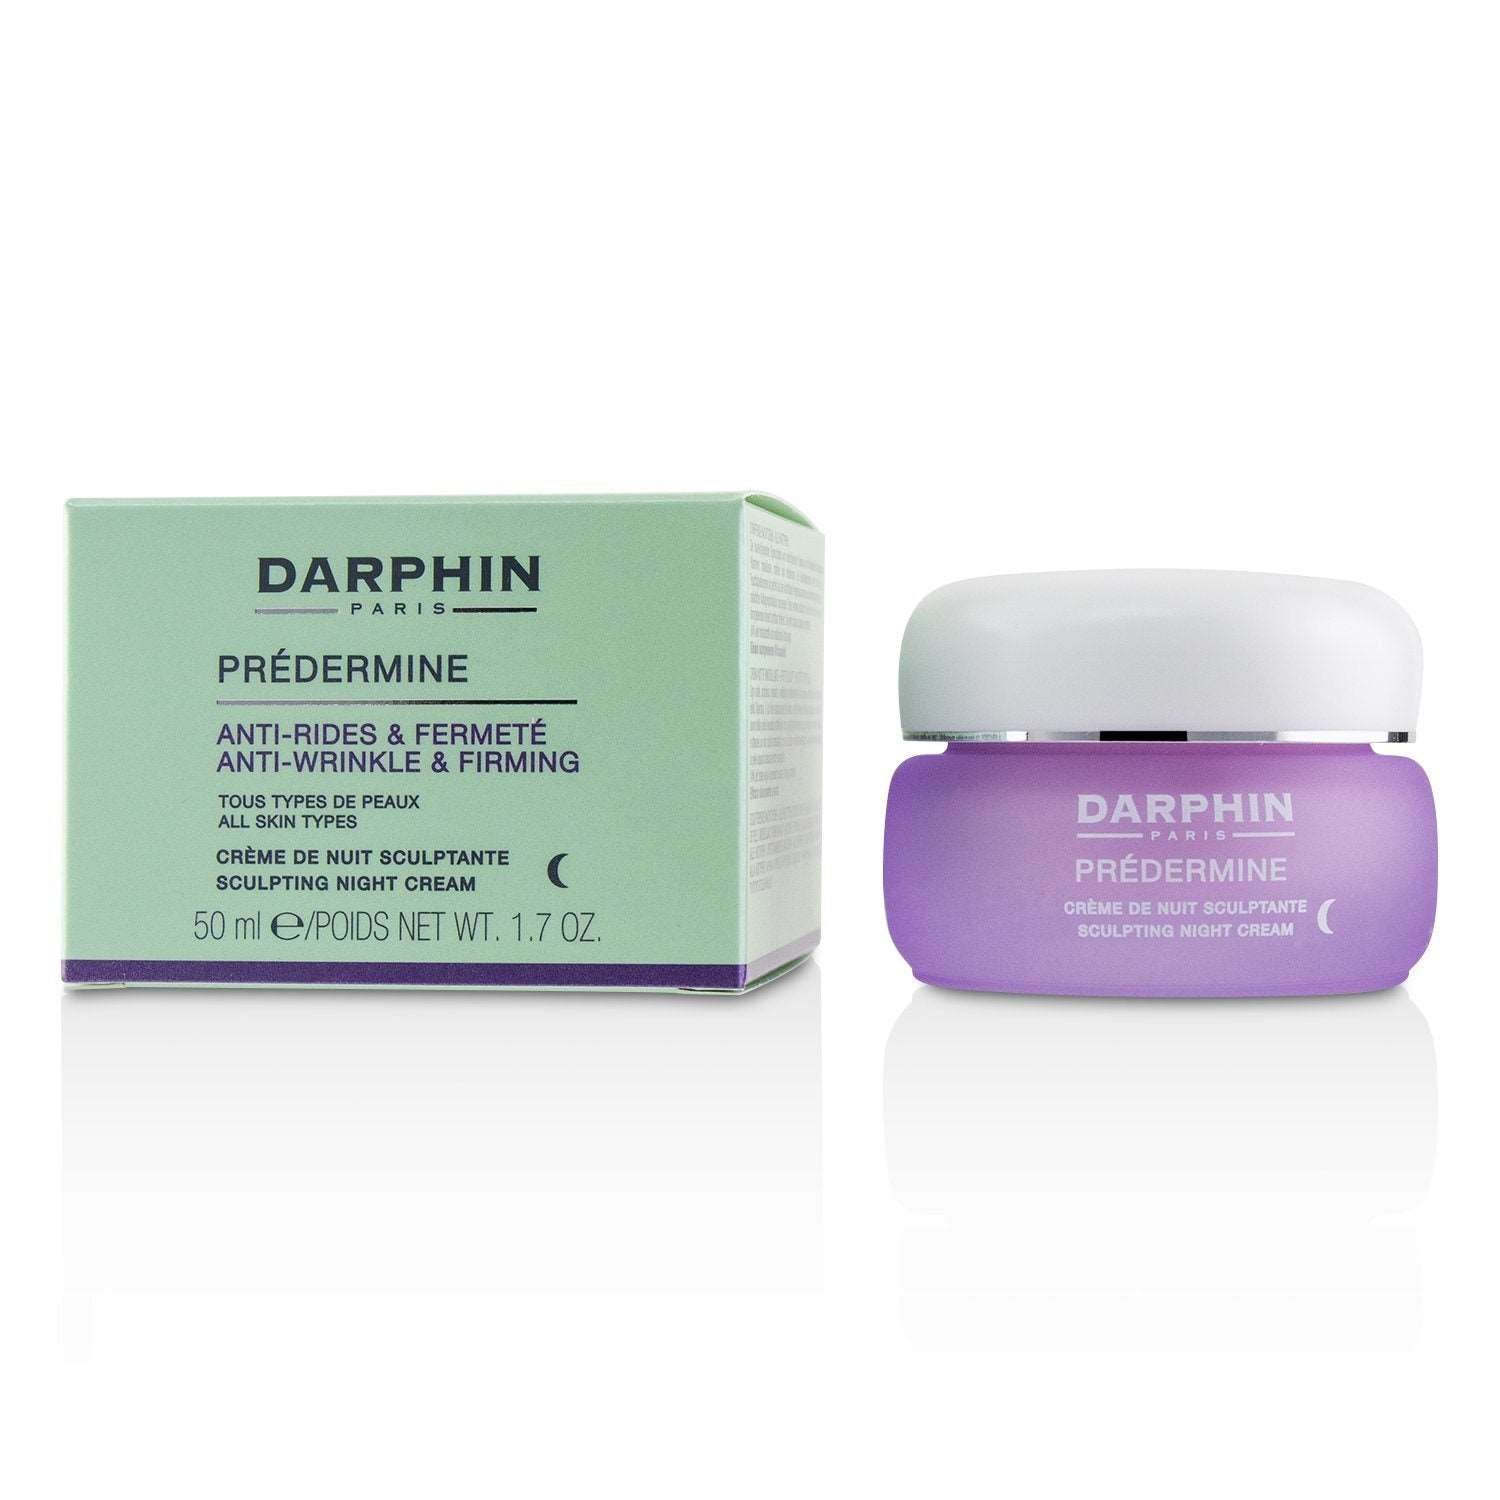 Darphin - Predermine Anti-Wrinkle - Firming and Sculpting Night Cream - 50ml/1.7oz 3P's Inclusive Beauty